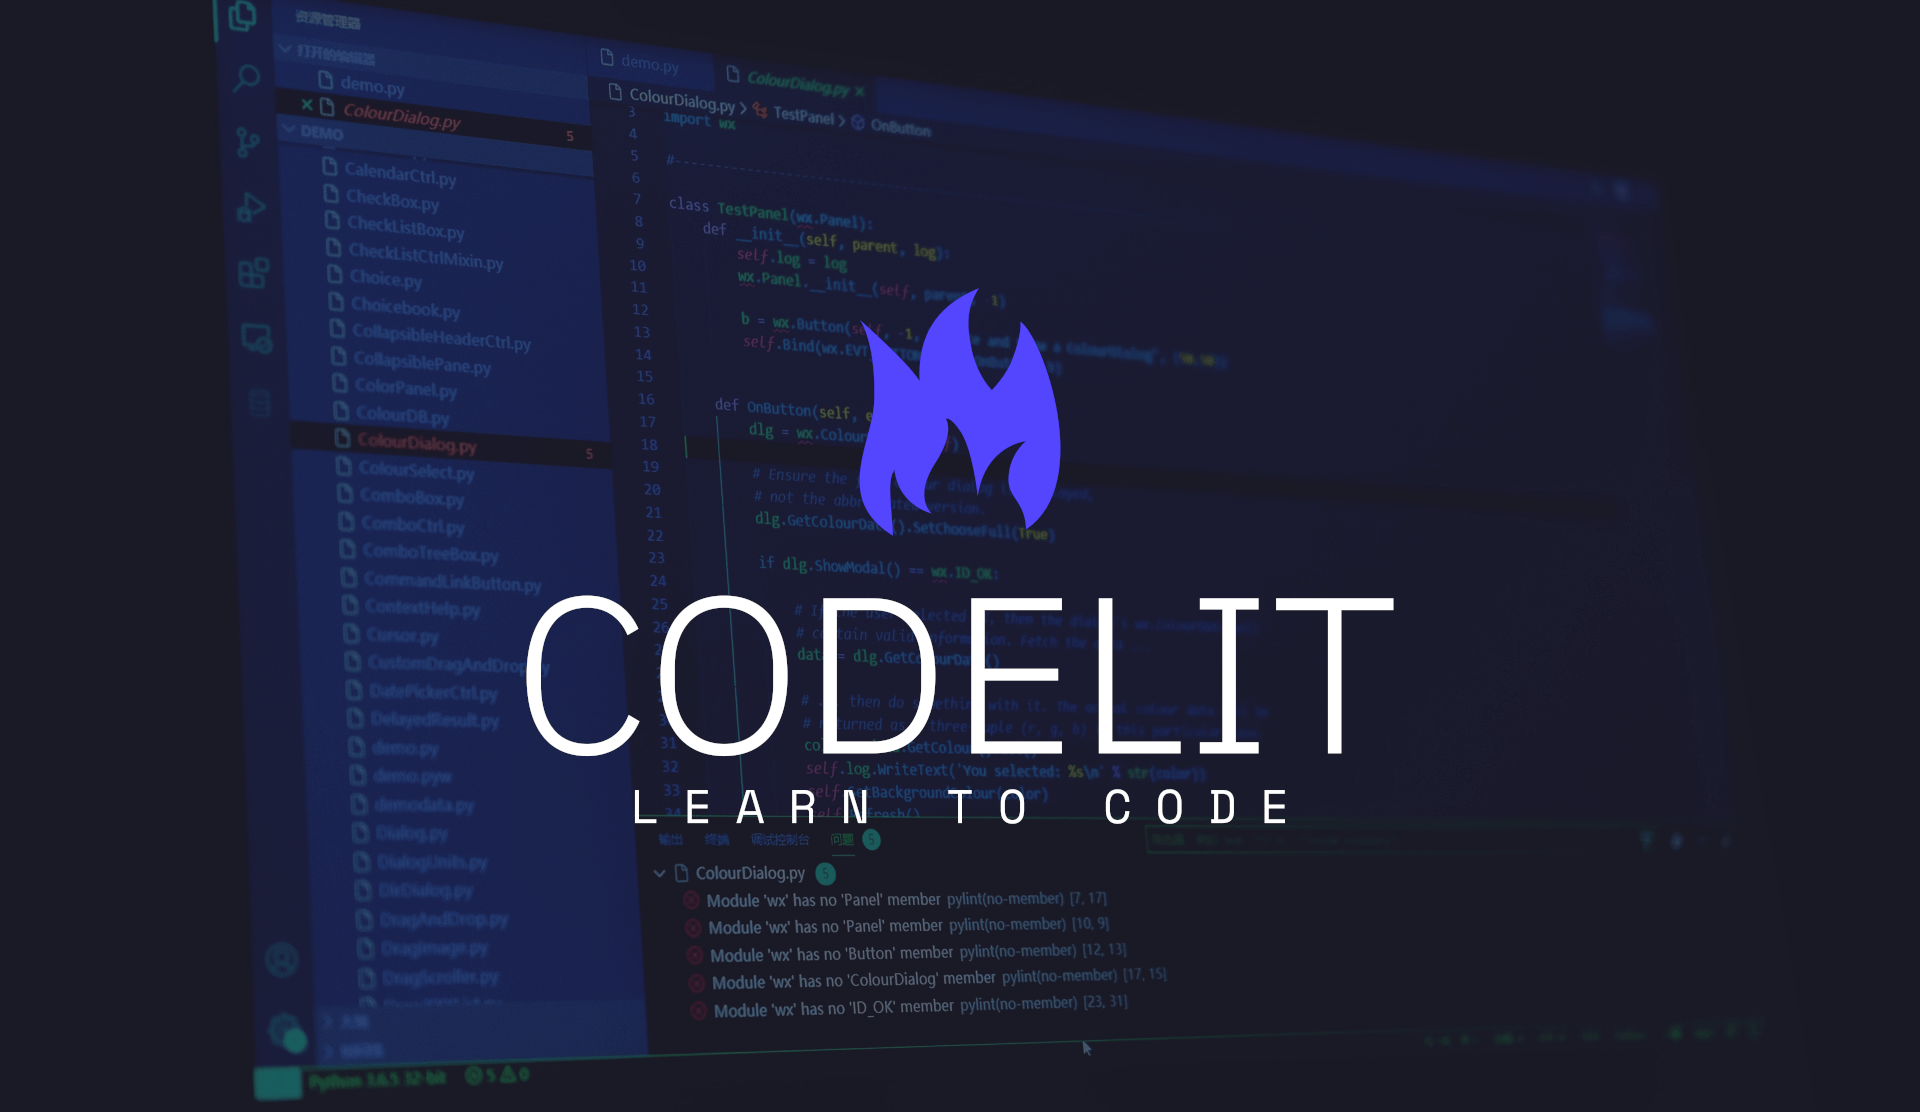 About Codelit app image